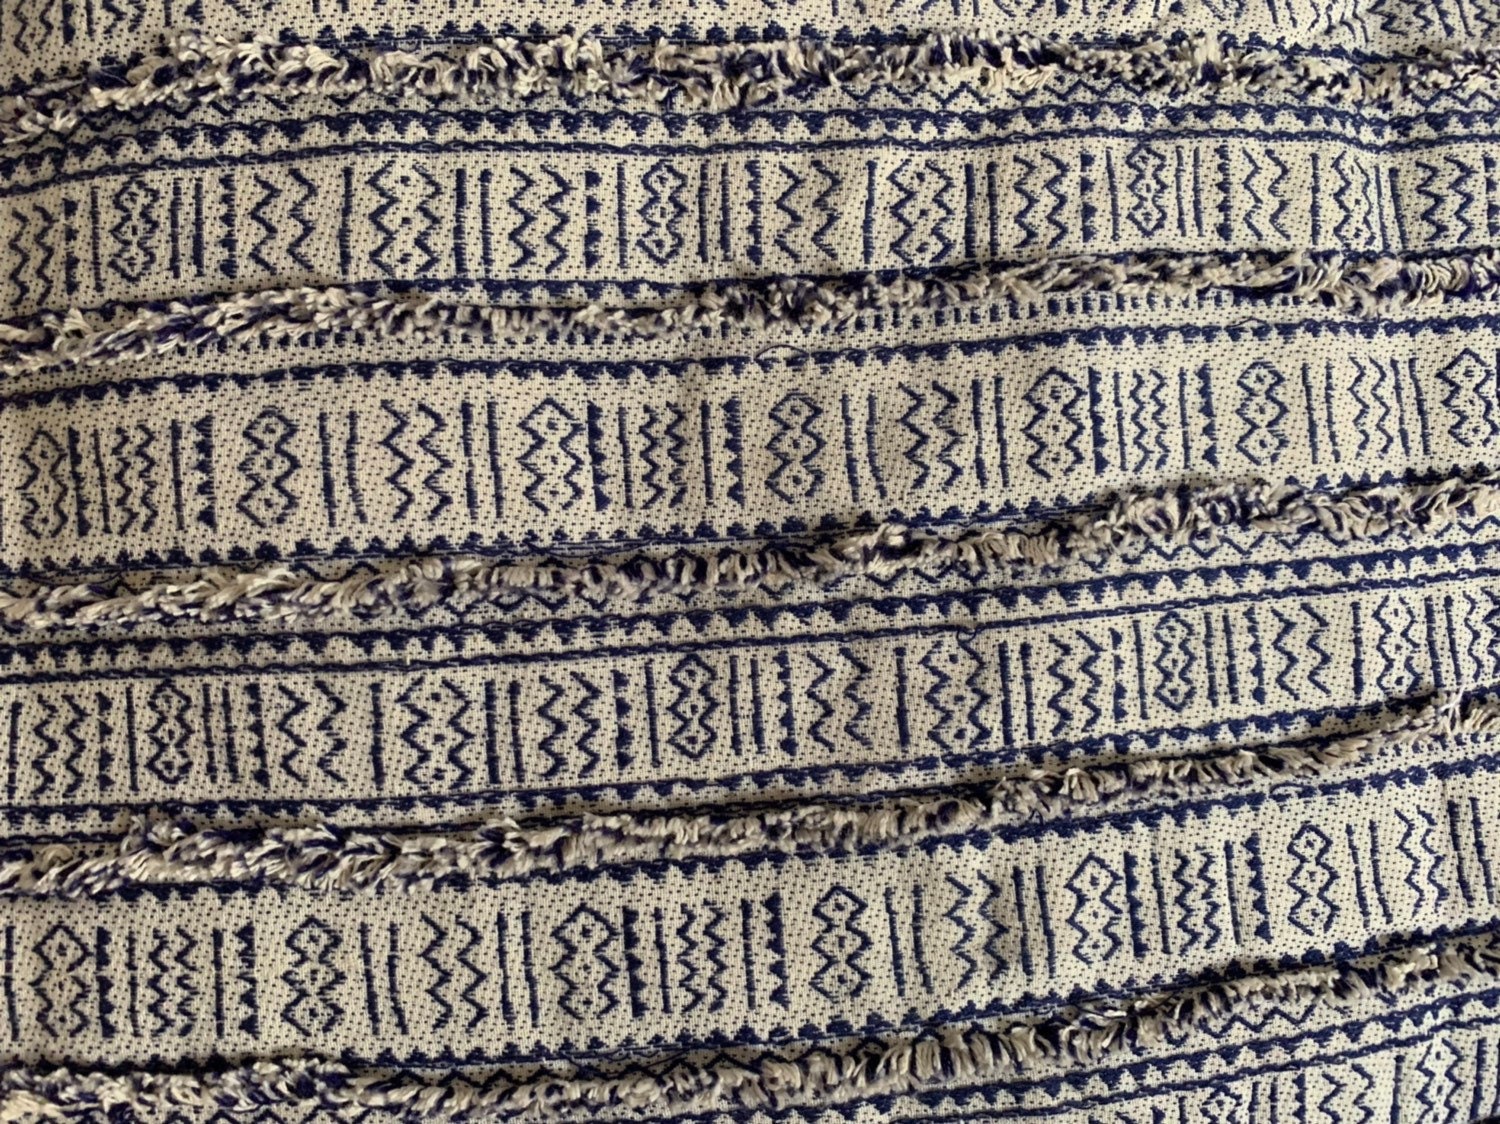 Upholstery fabric woven fabric handloom fabric bag fabric | Etsy